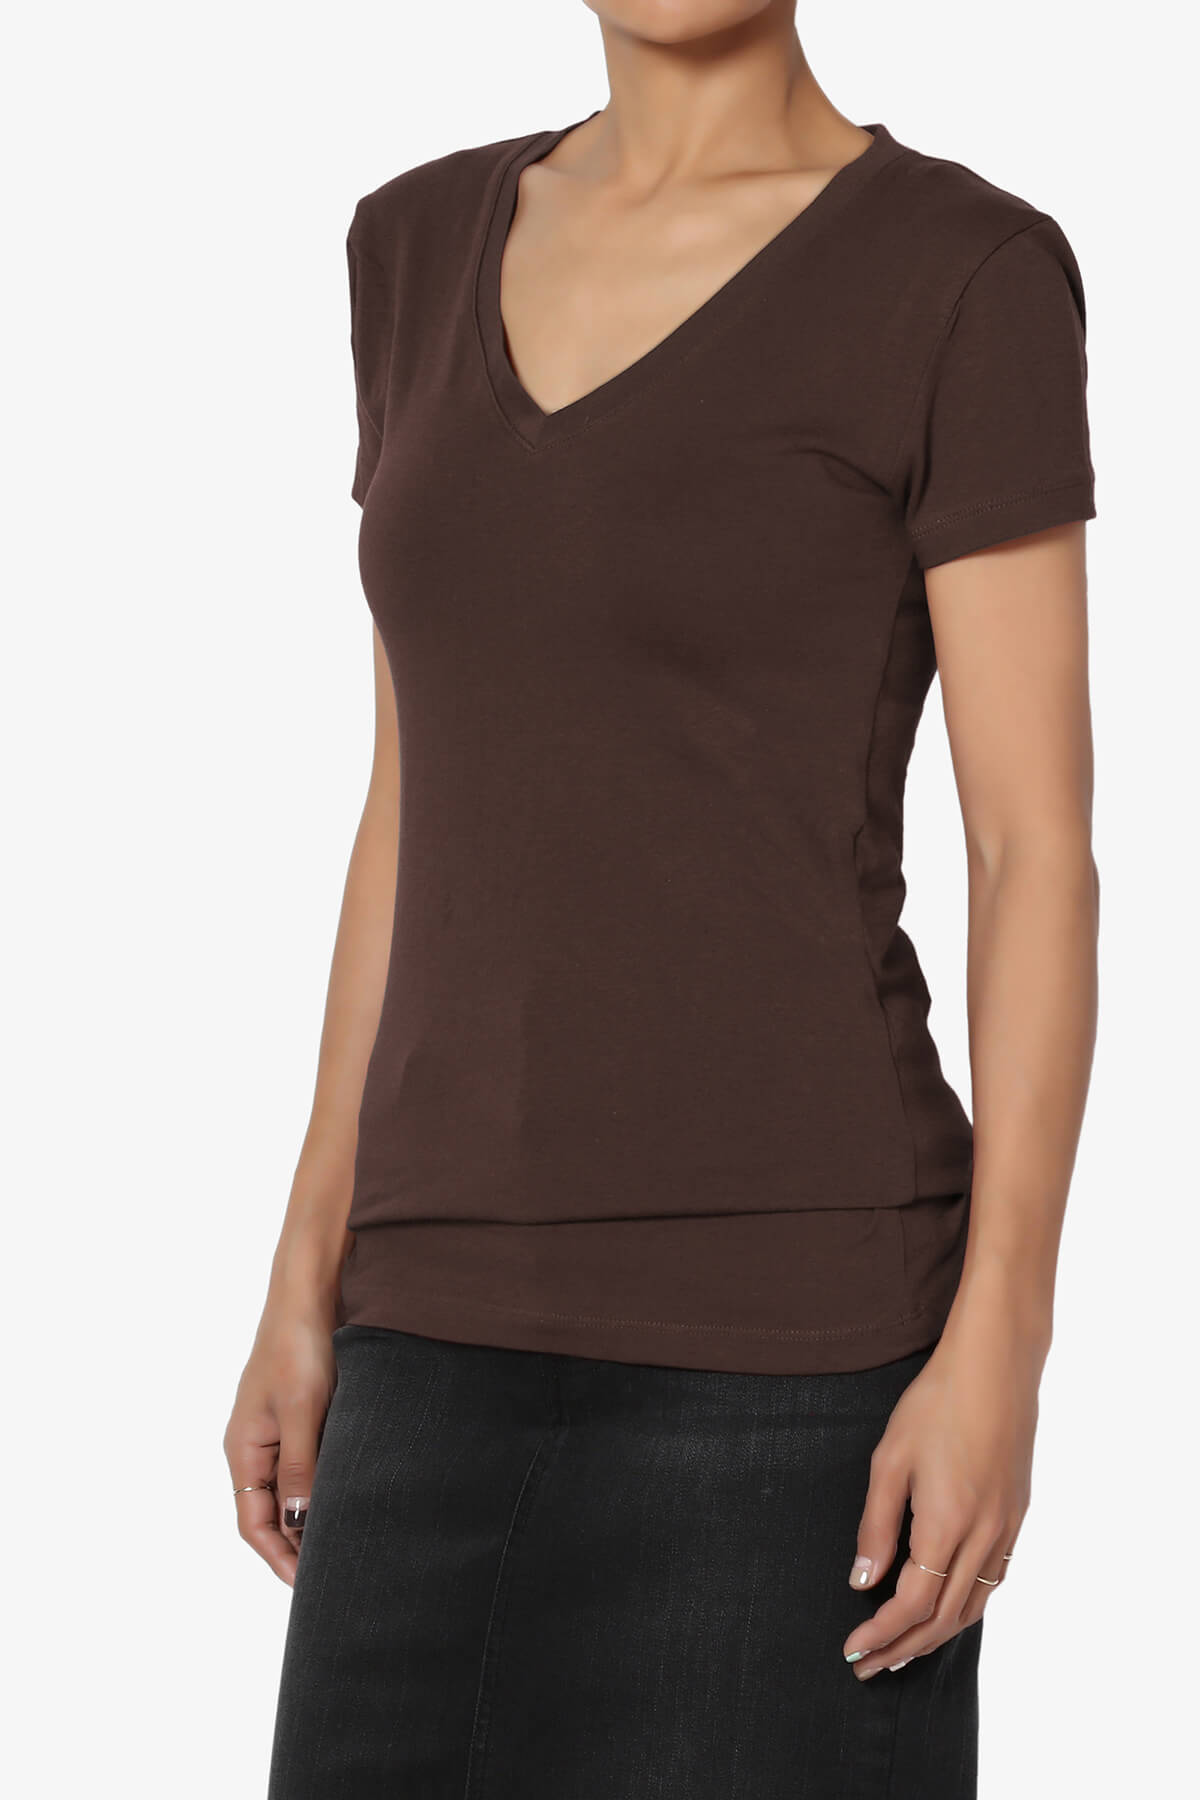 Women's Basic V Neck Short Sleeve T-Shirts Plain Stretch Cotton Spandex Top Tee - image 3 of 6